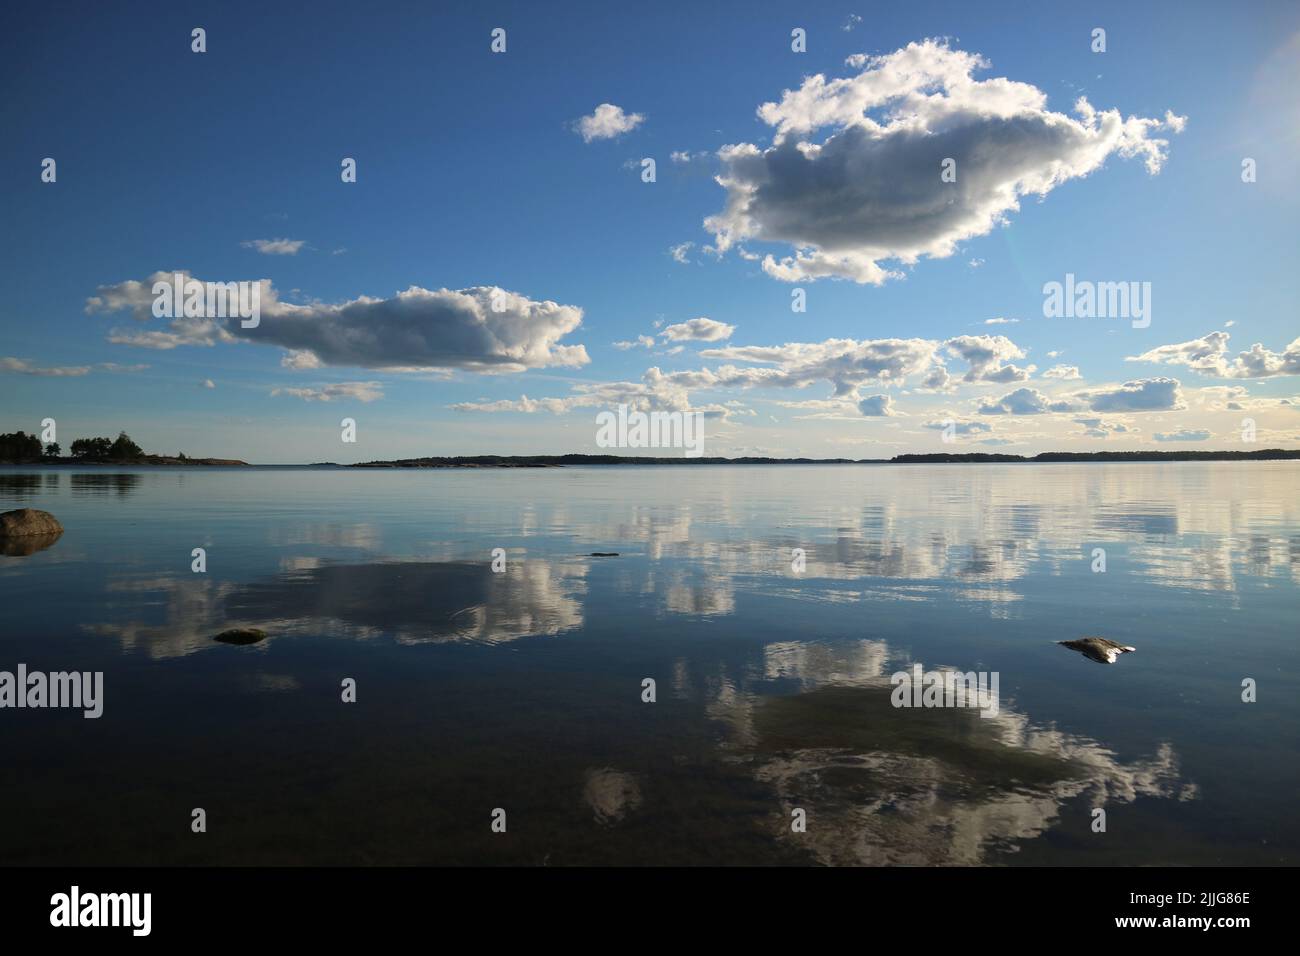 Clouds reglecting on the still water of Degeröfjärden in Inkoo, Finland. Stock Photo